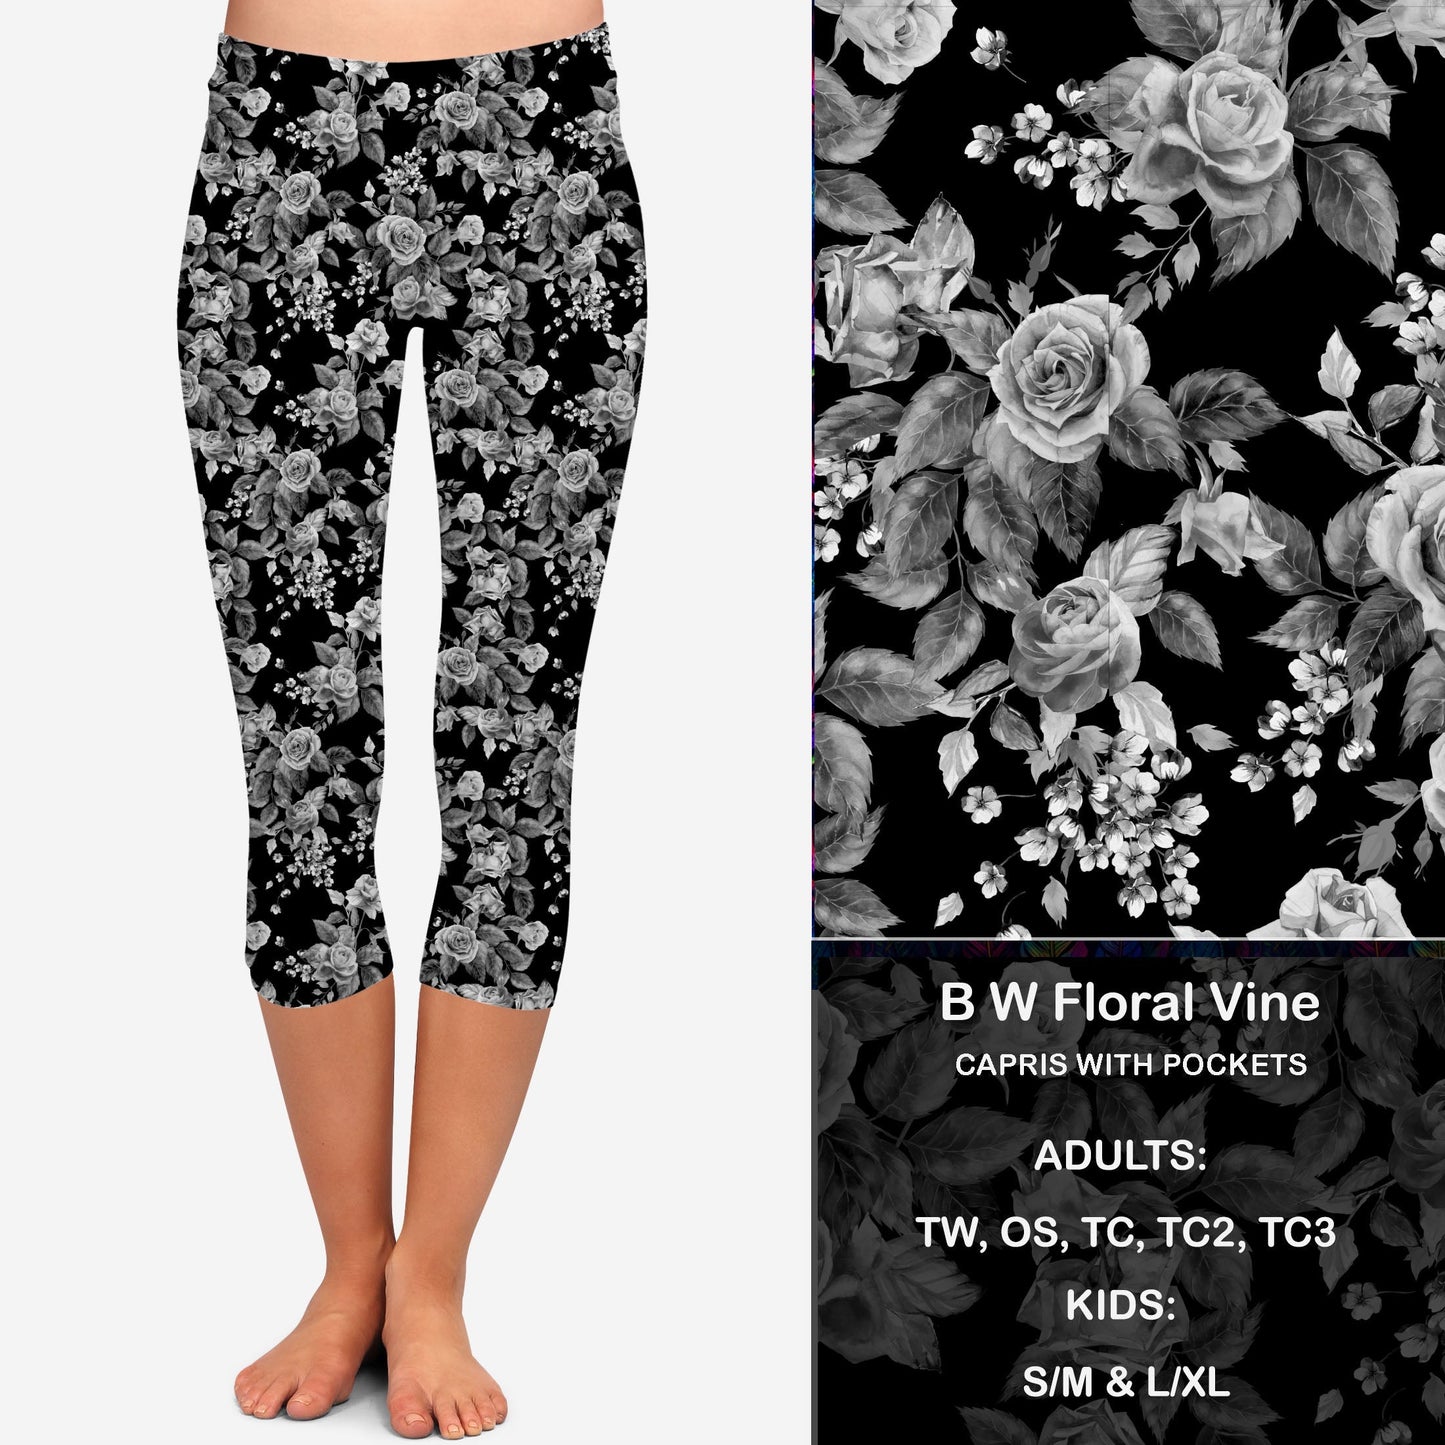 B W Floral Vine Leggings & Capris with Pockets